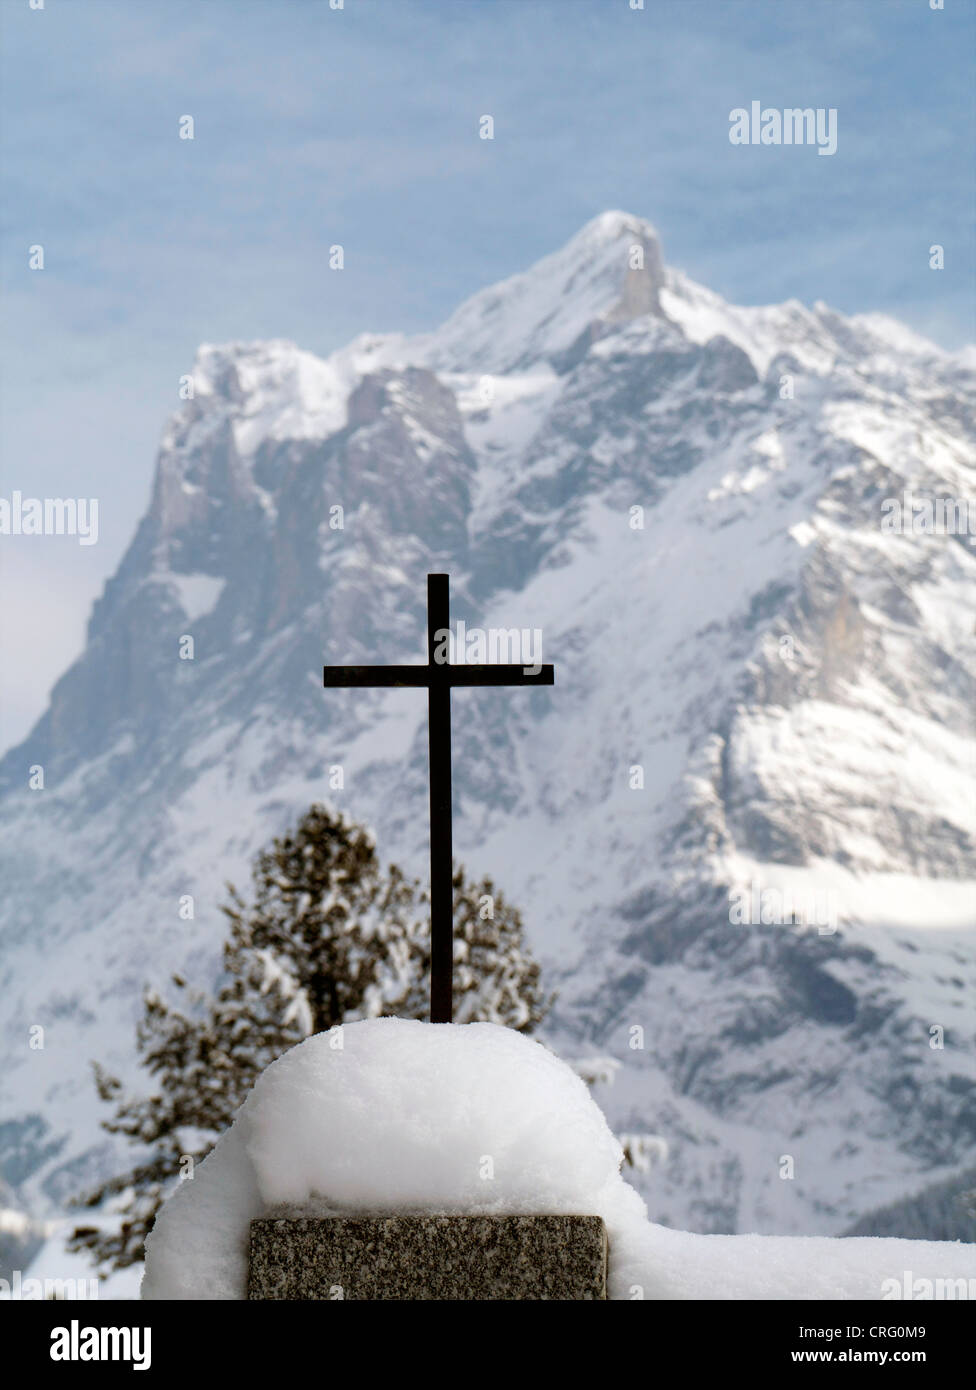 Grindelwald skiing region in Interlaken-Oberhasli Switzerland Stock Photo